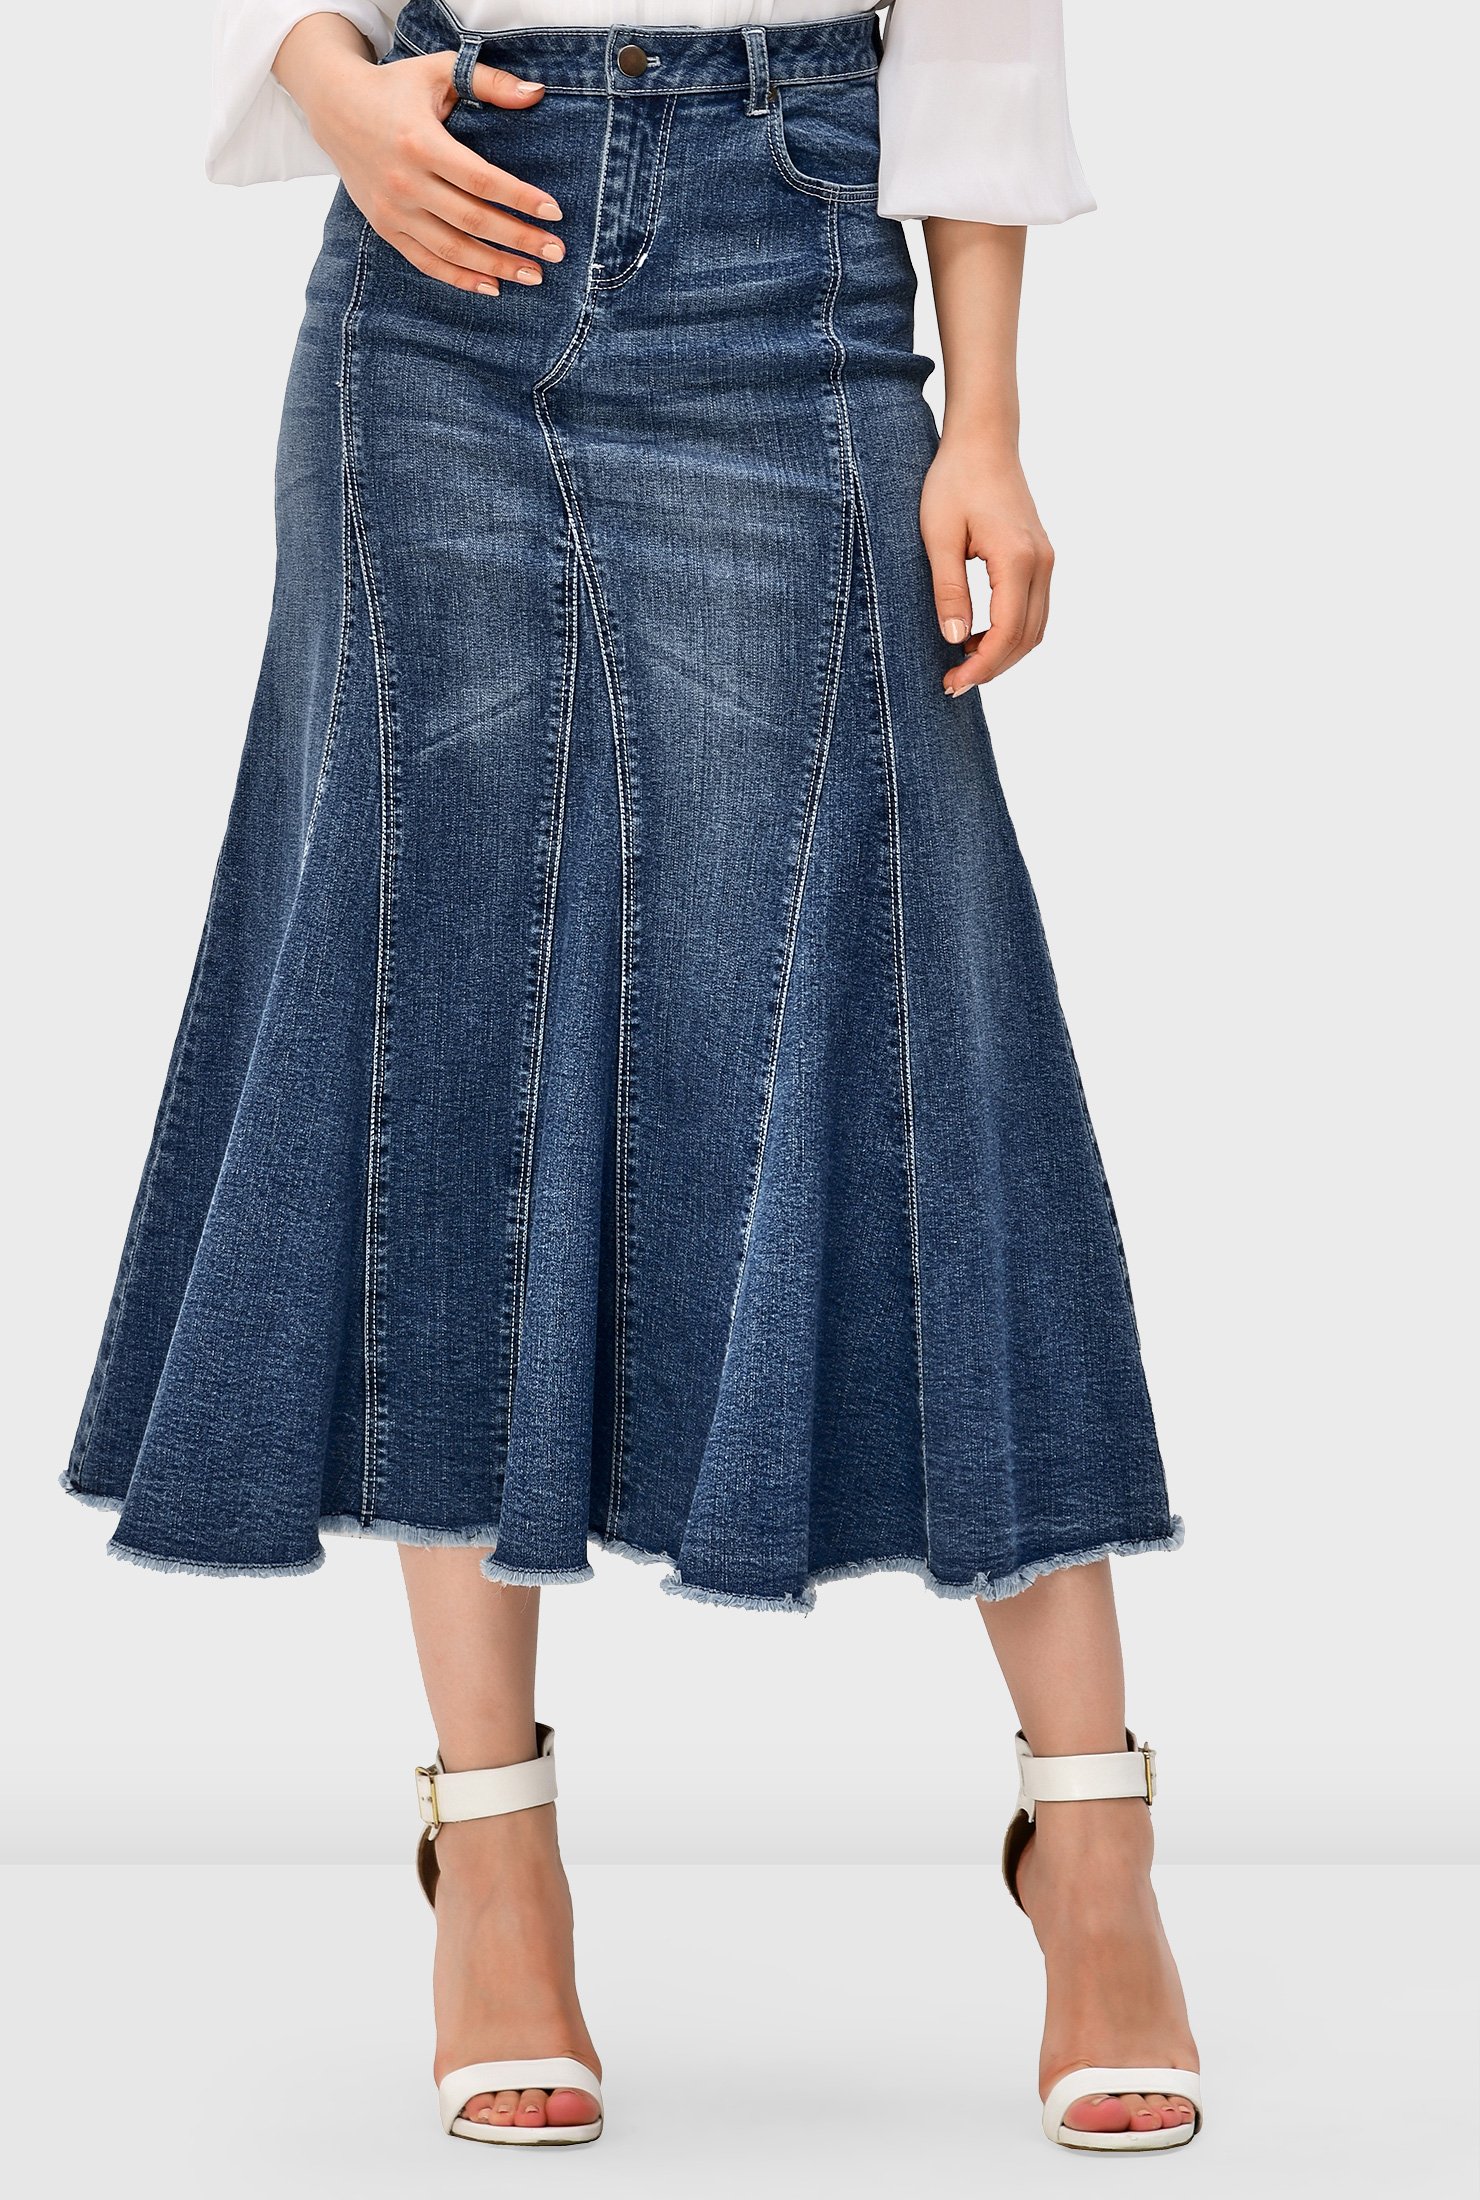 Shop Button front denim straight skirt | eShakti